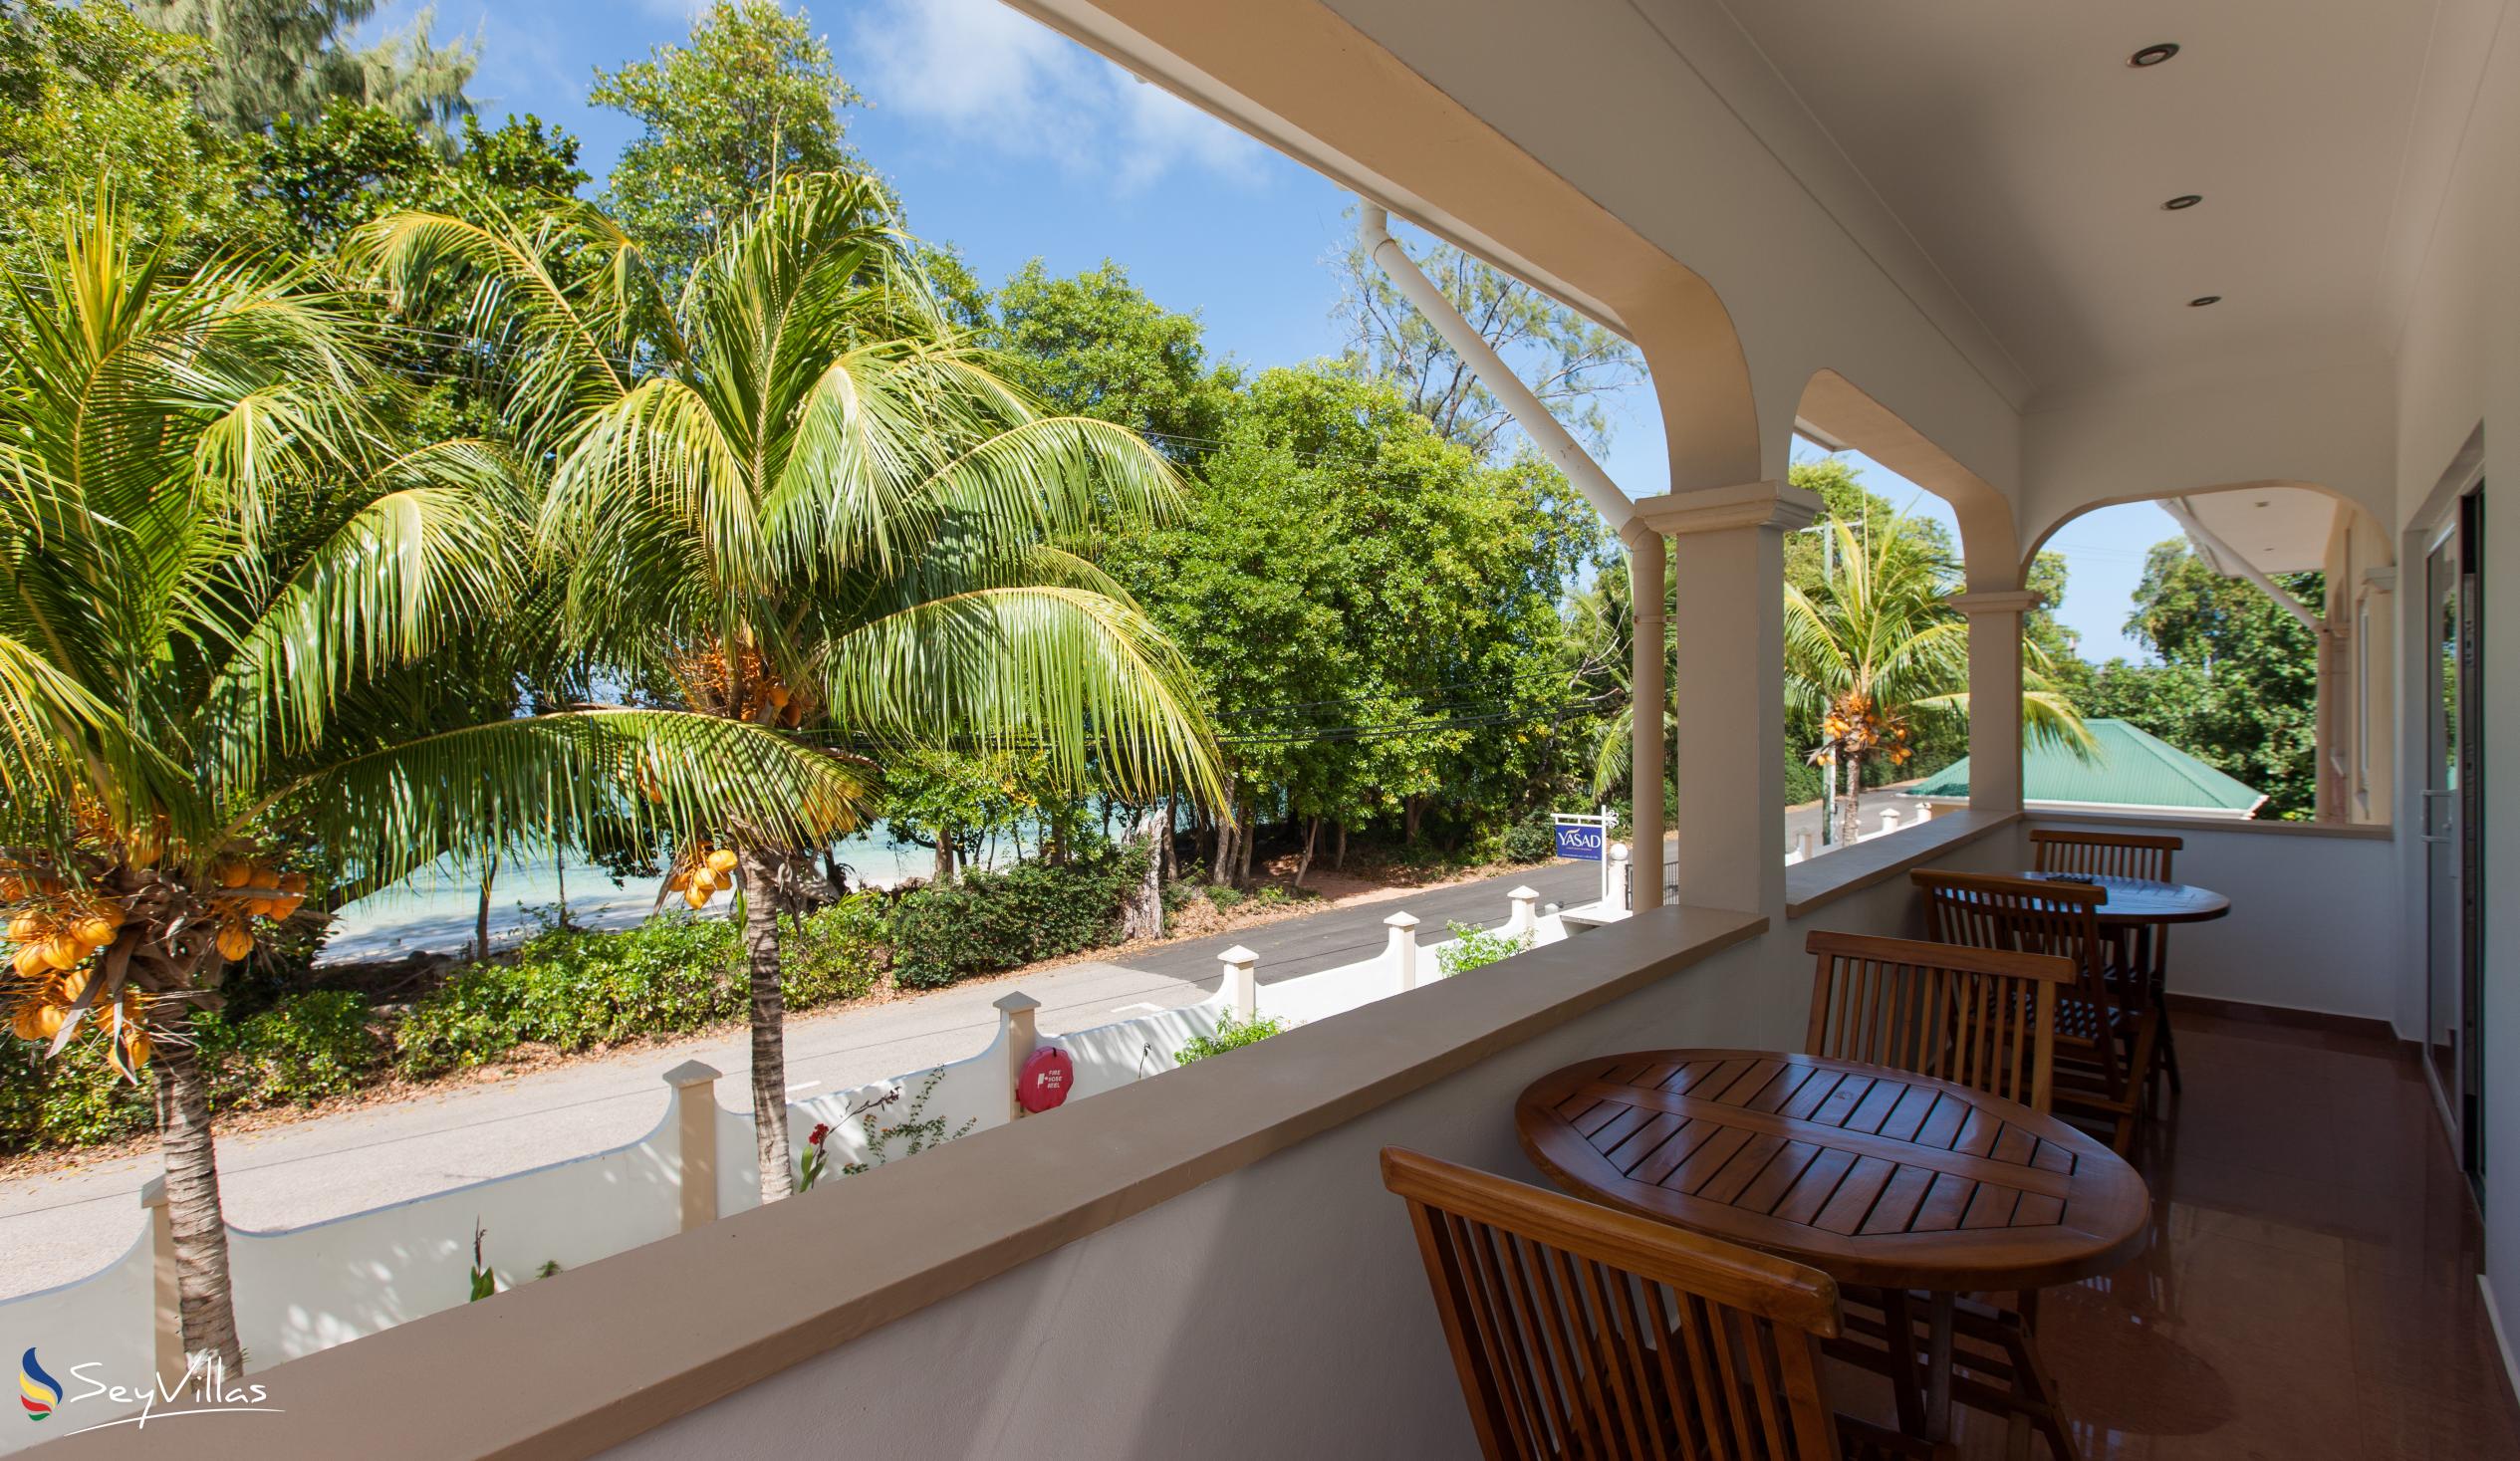 Photo 8: YASAD Luxury Beach Residence - 3-Bedroom Apartment - Praslin (Seychelles)